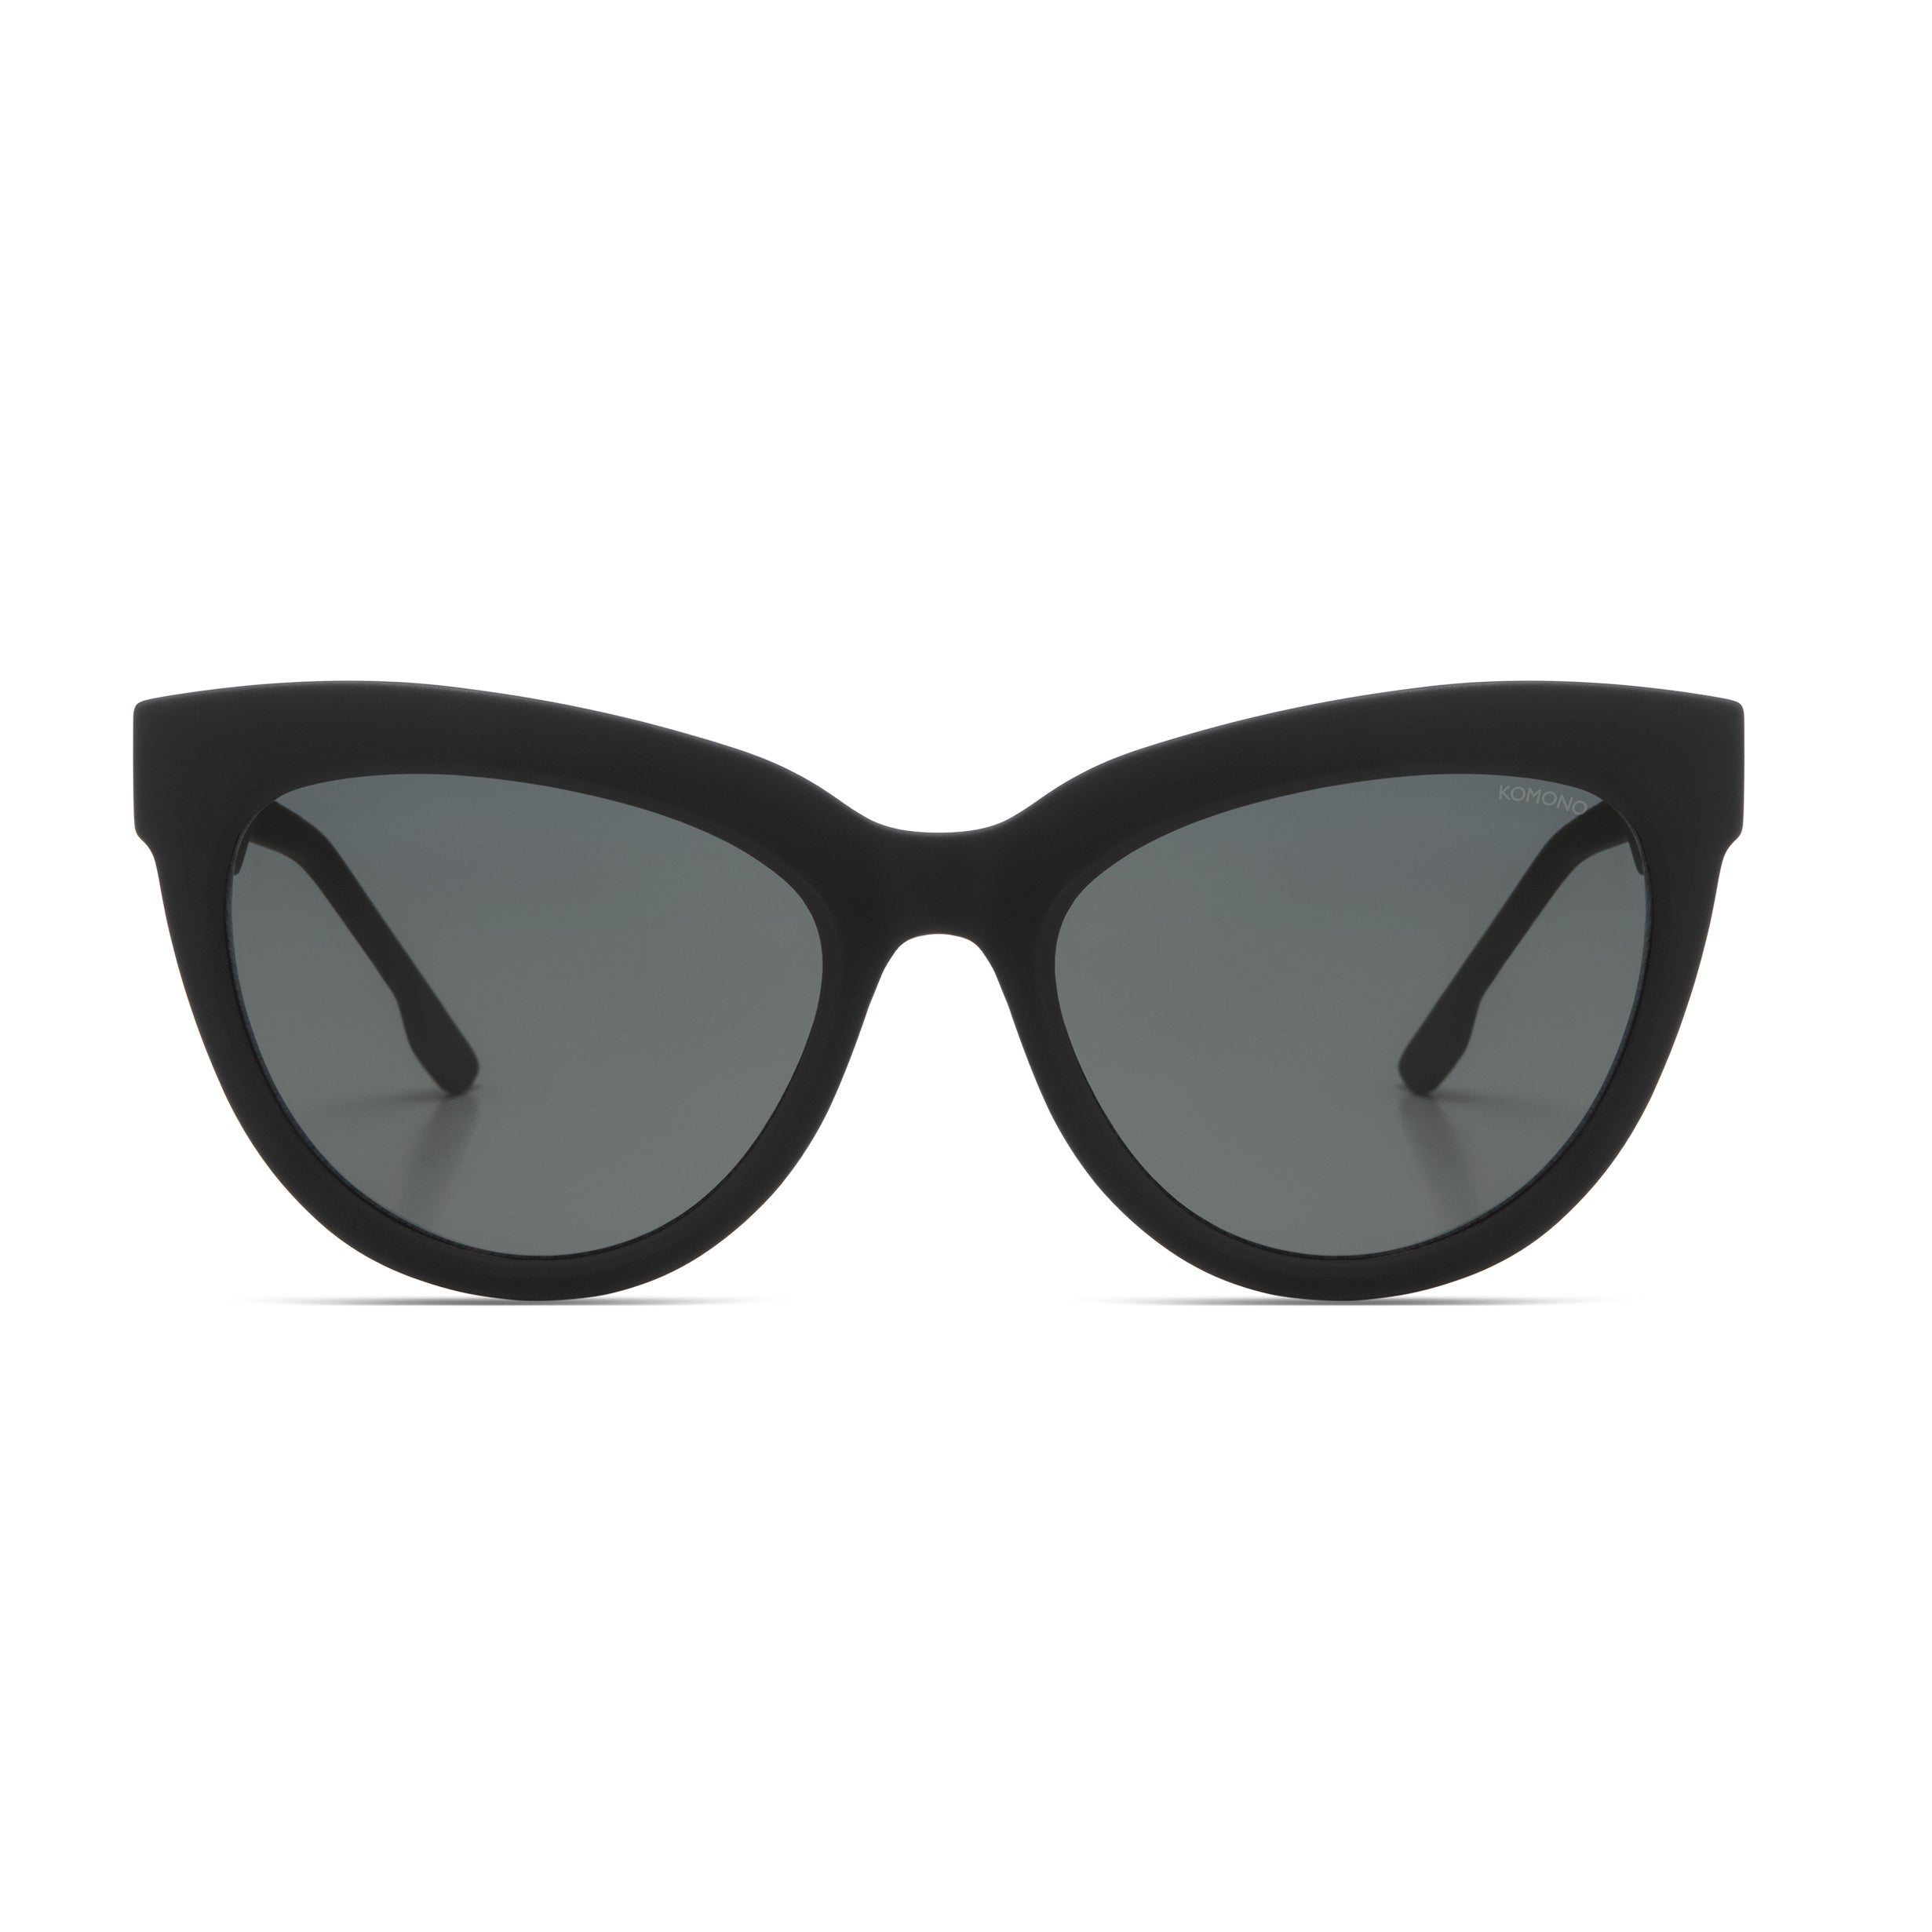 LIZ | משקפי שמש חתוליות | BLISS TLV | Reviews on Judge.me